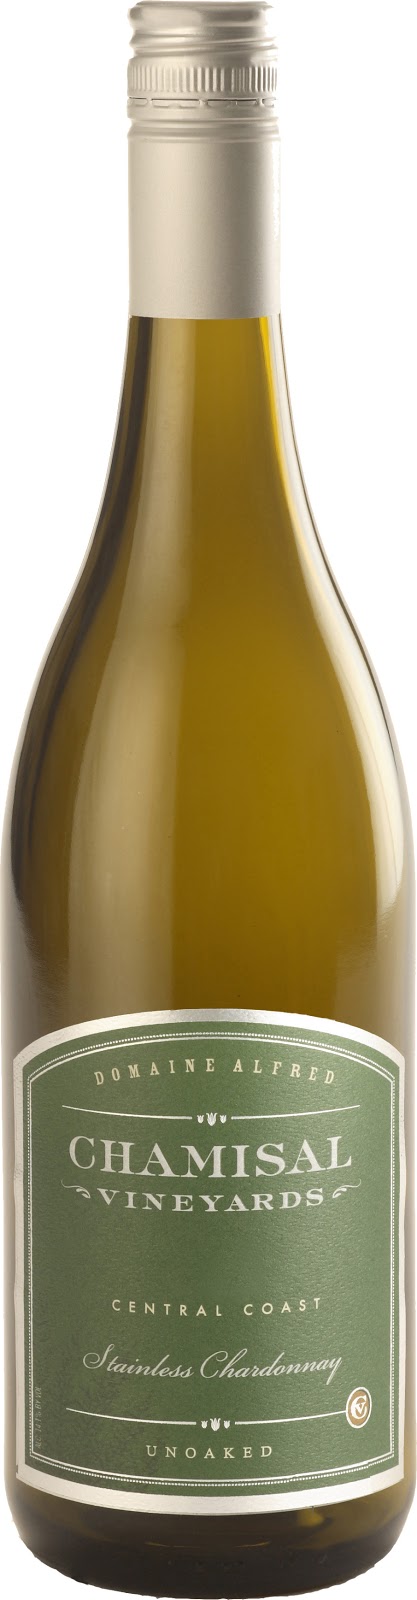 Chamisal Vineyards Chardonnay Stainless 2017 750ml